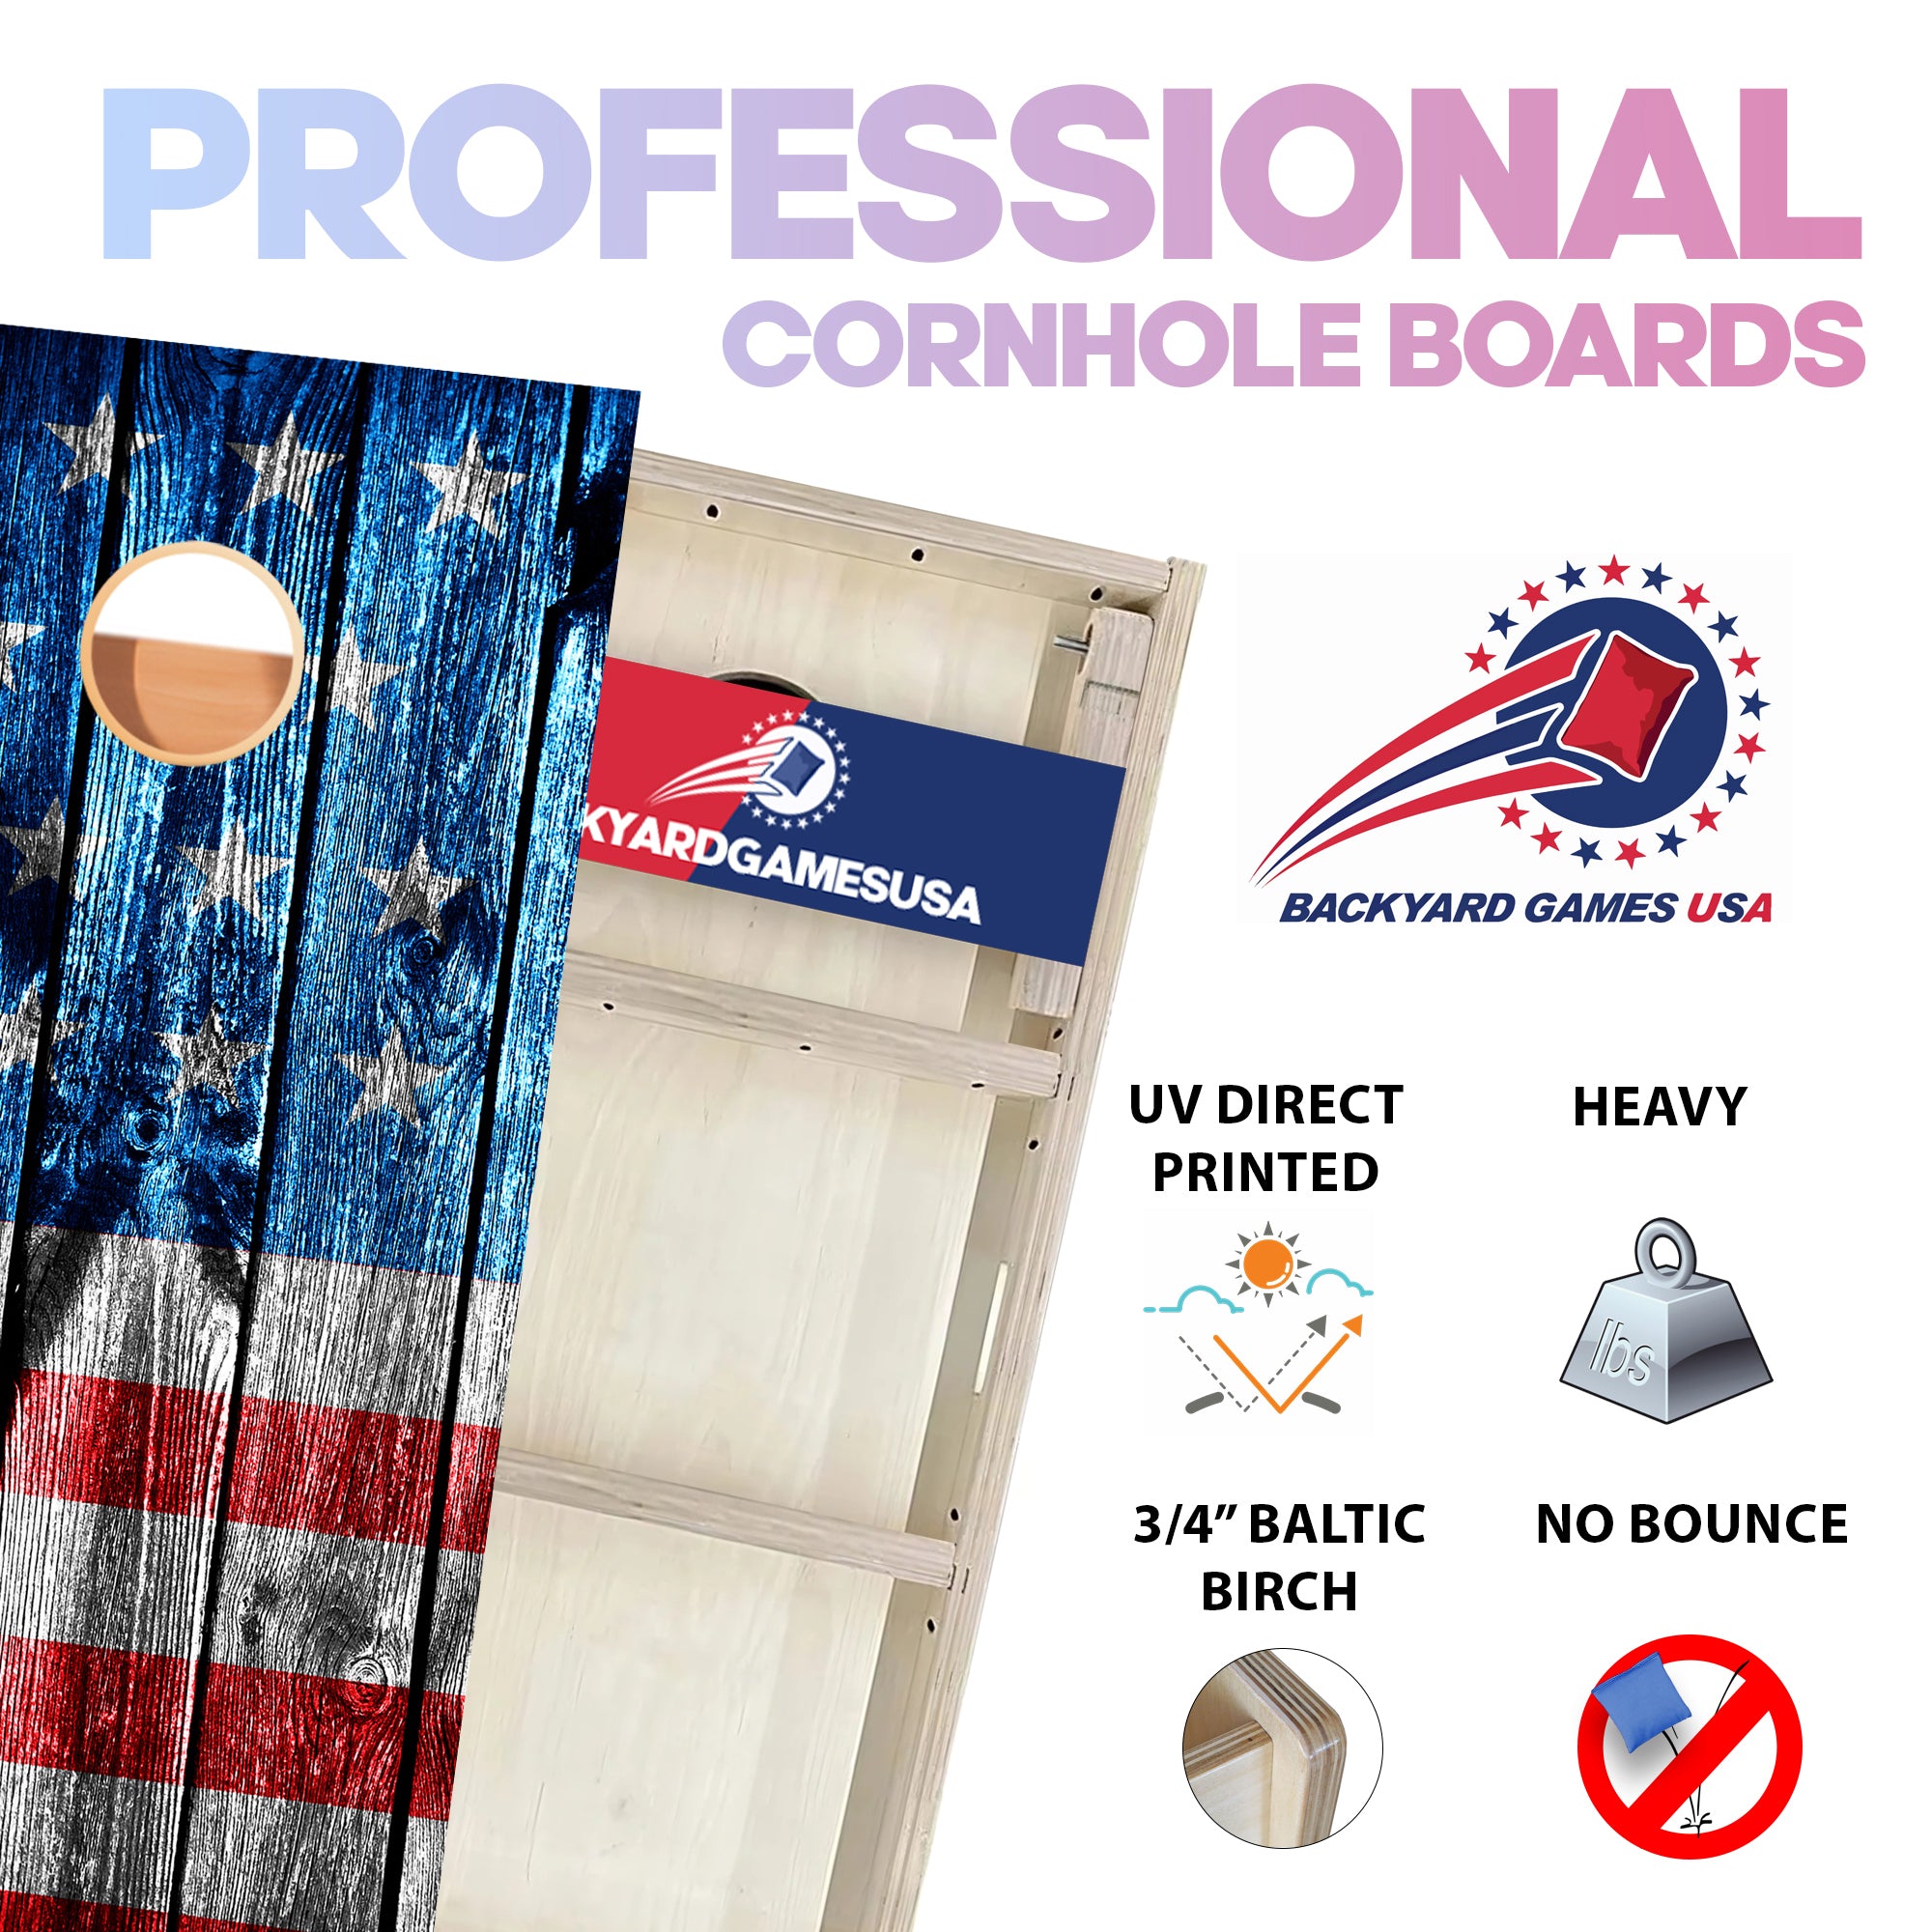 Wooden Panel Professional Cornhole Boards